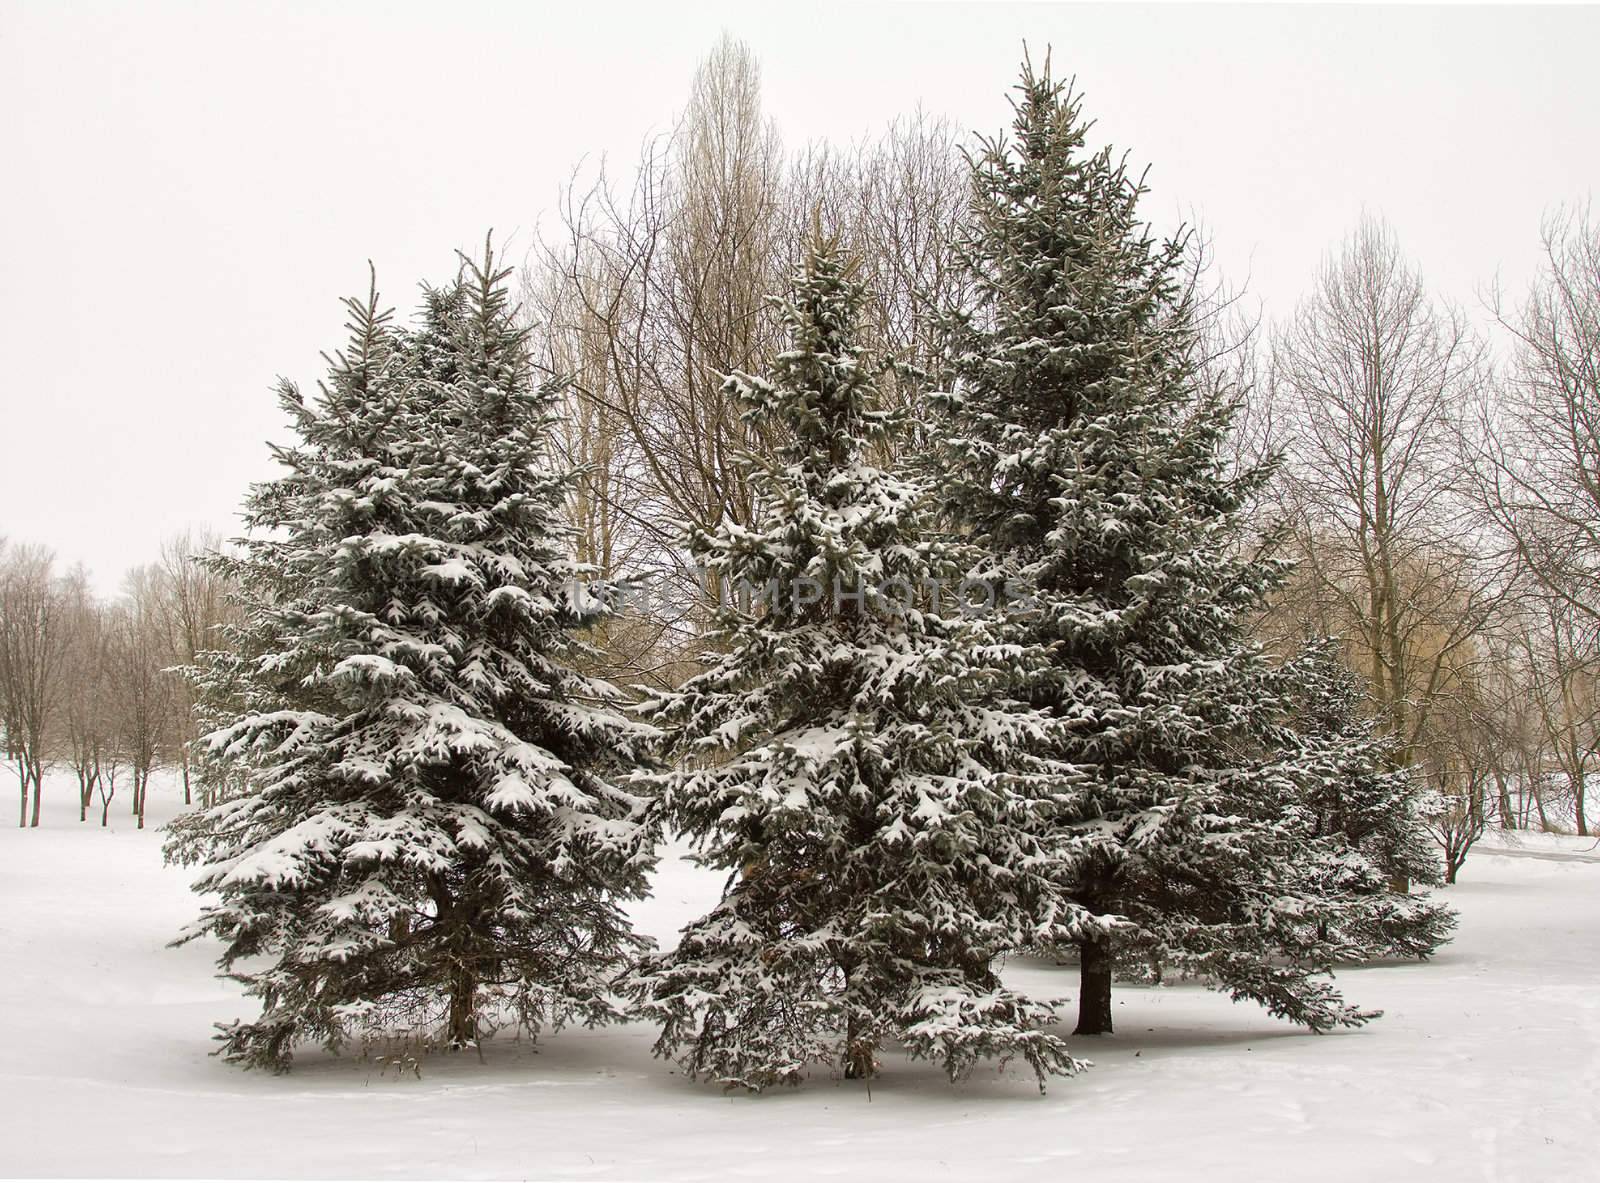 fir trees in snow by Alekcey